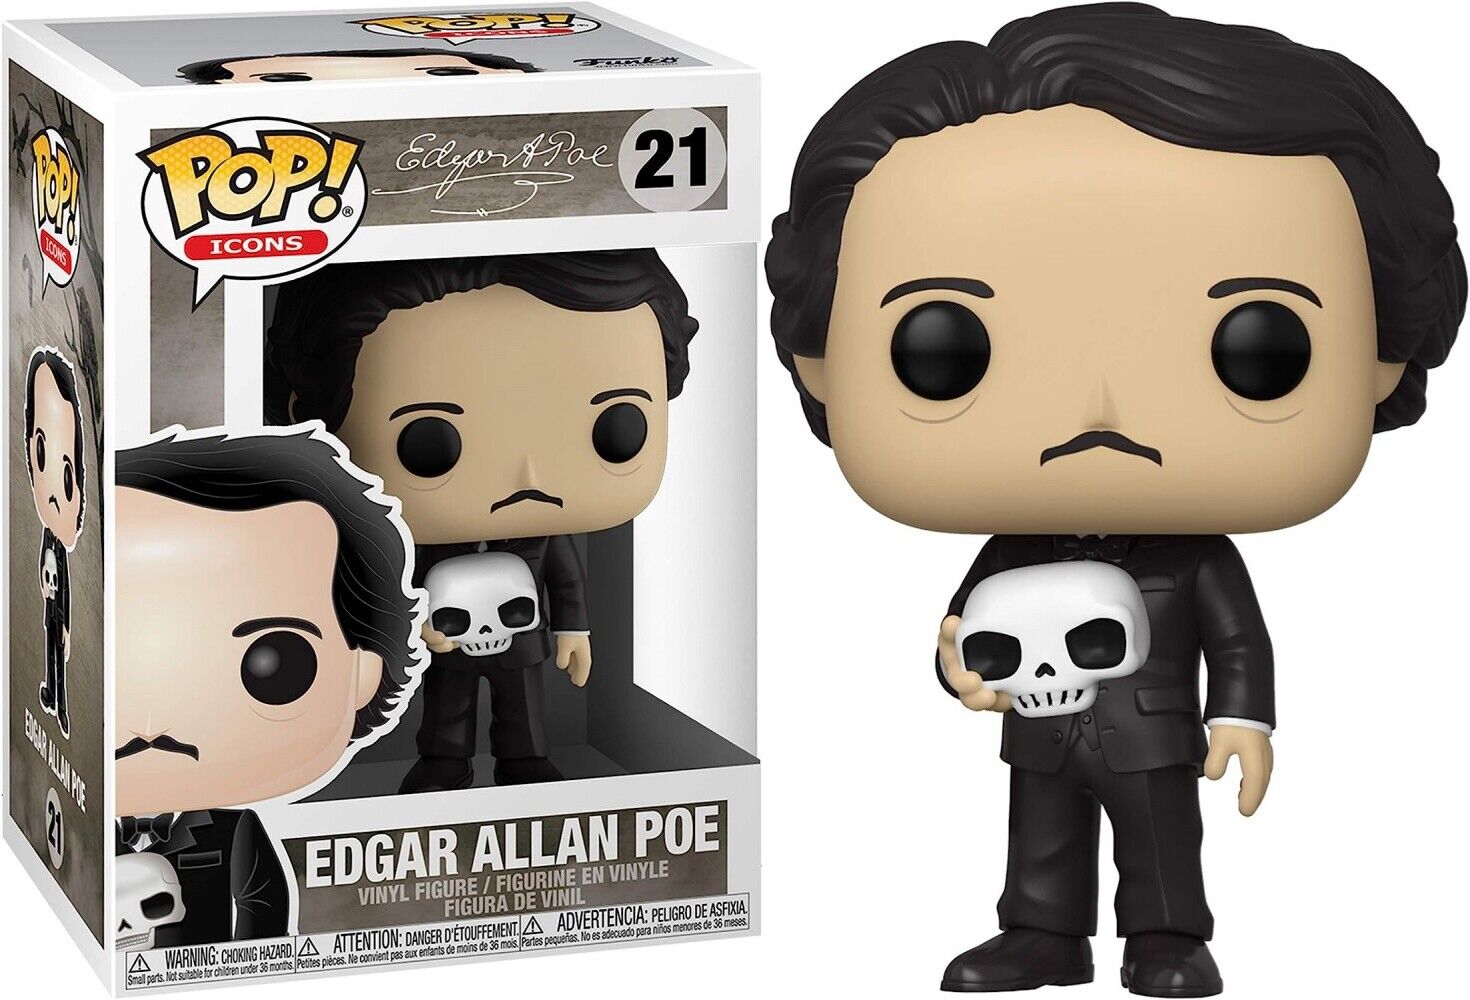 Edgar Allen Poe Writer ICONS Vinyl POP Figure Toy #21 FUNKO NEW IN BOX